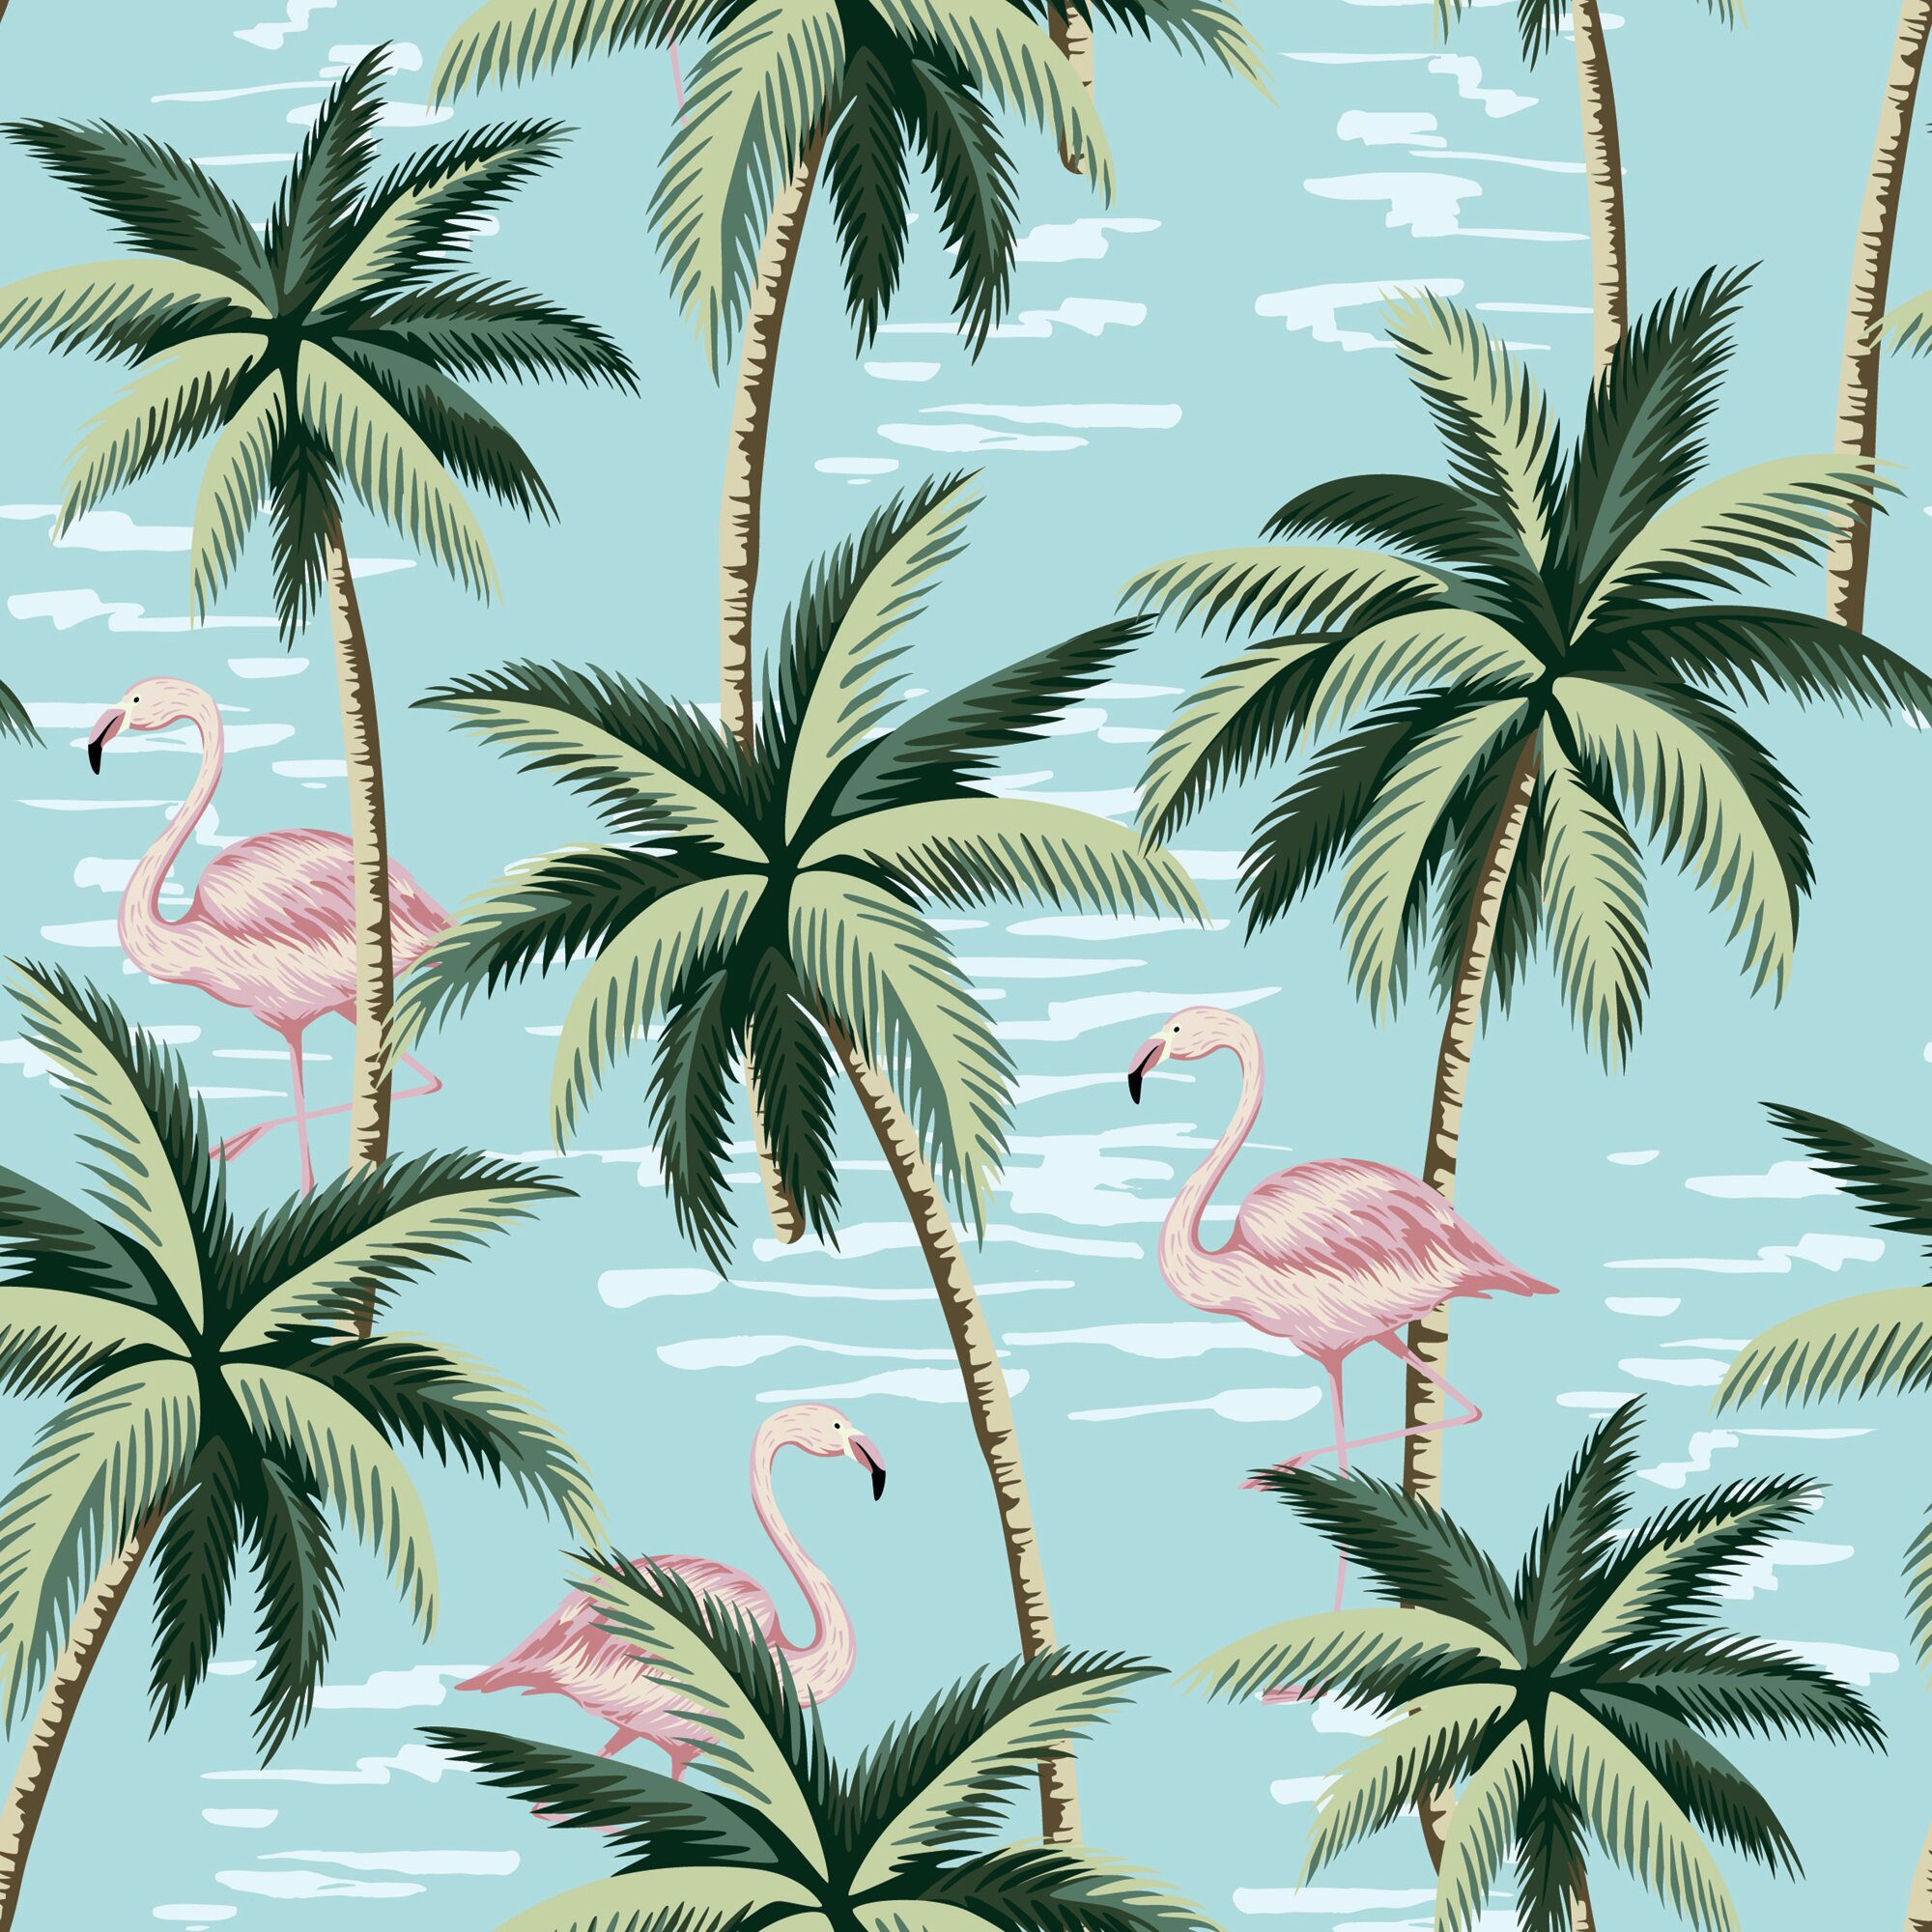 Buy Flock of Flamingos Wallpaper Self Adhesive Wallpaper Online in India   Etsy